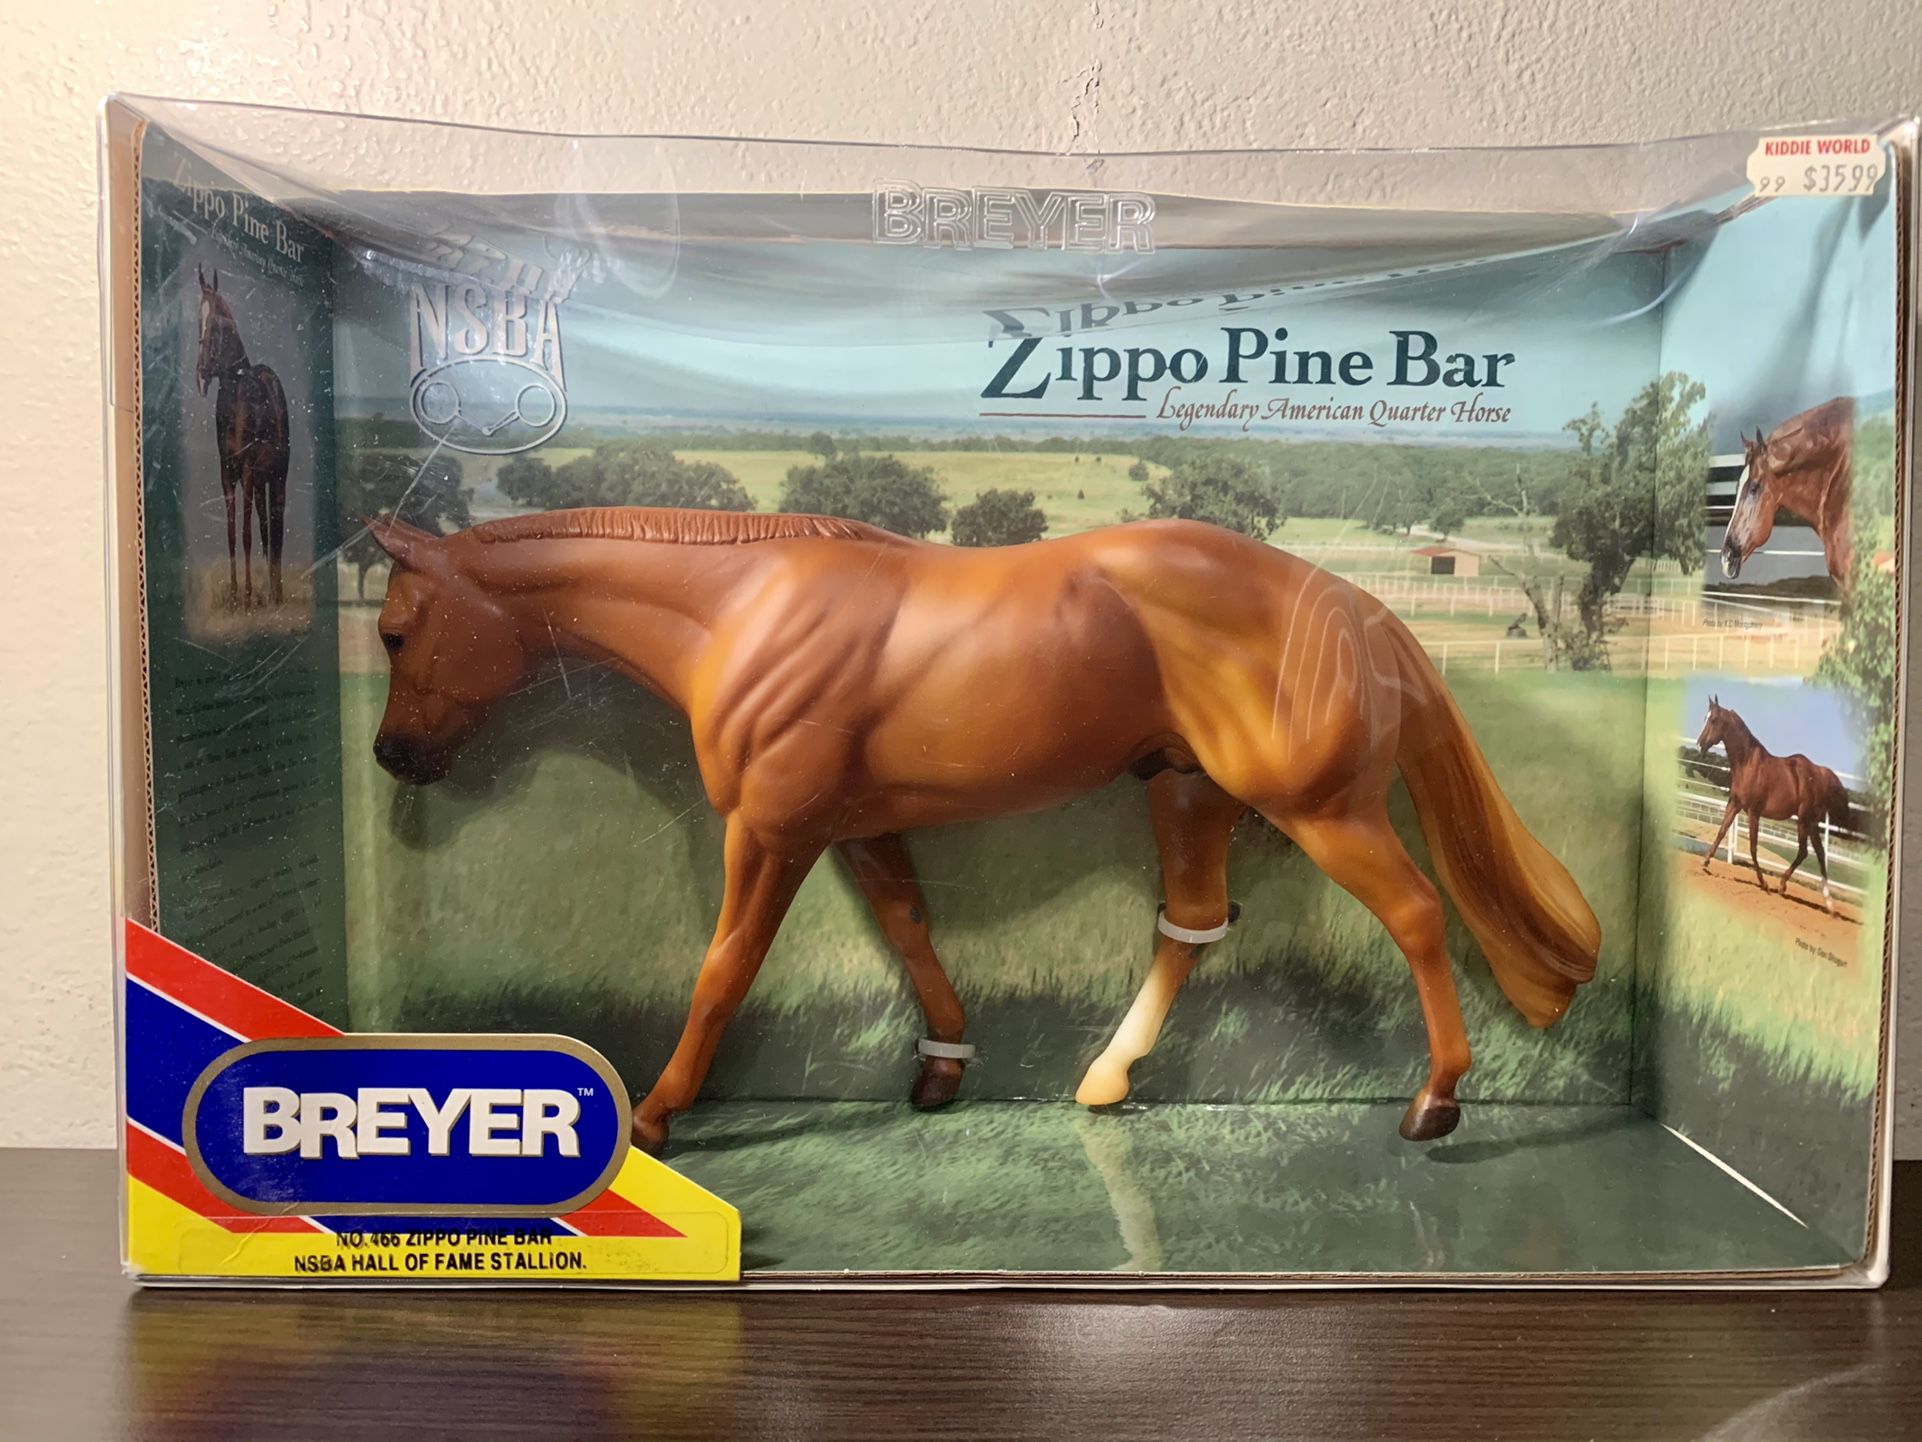 Vintage Breyer Horse - Zippo Pine Bar